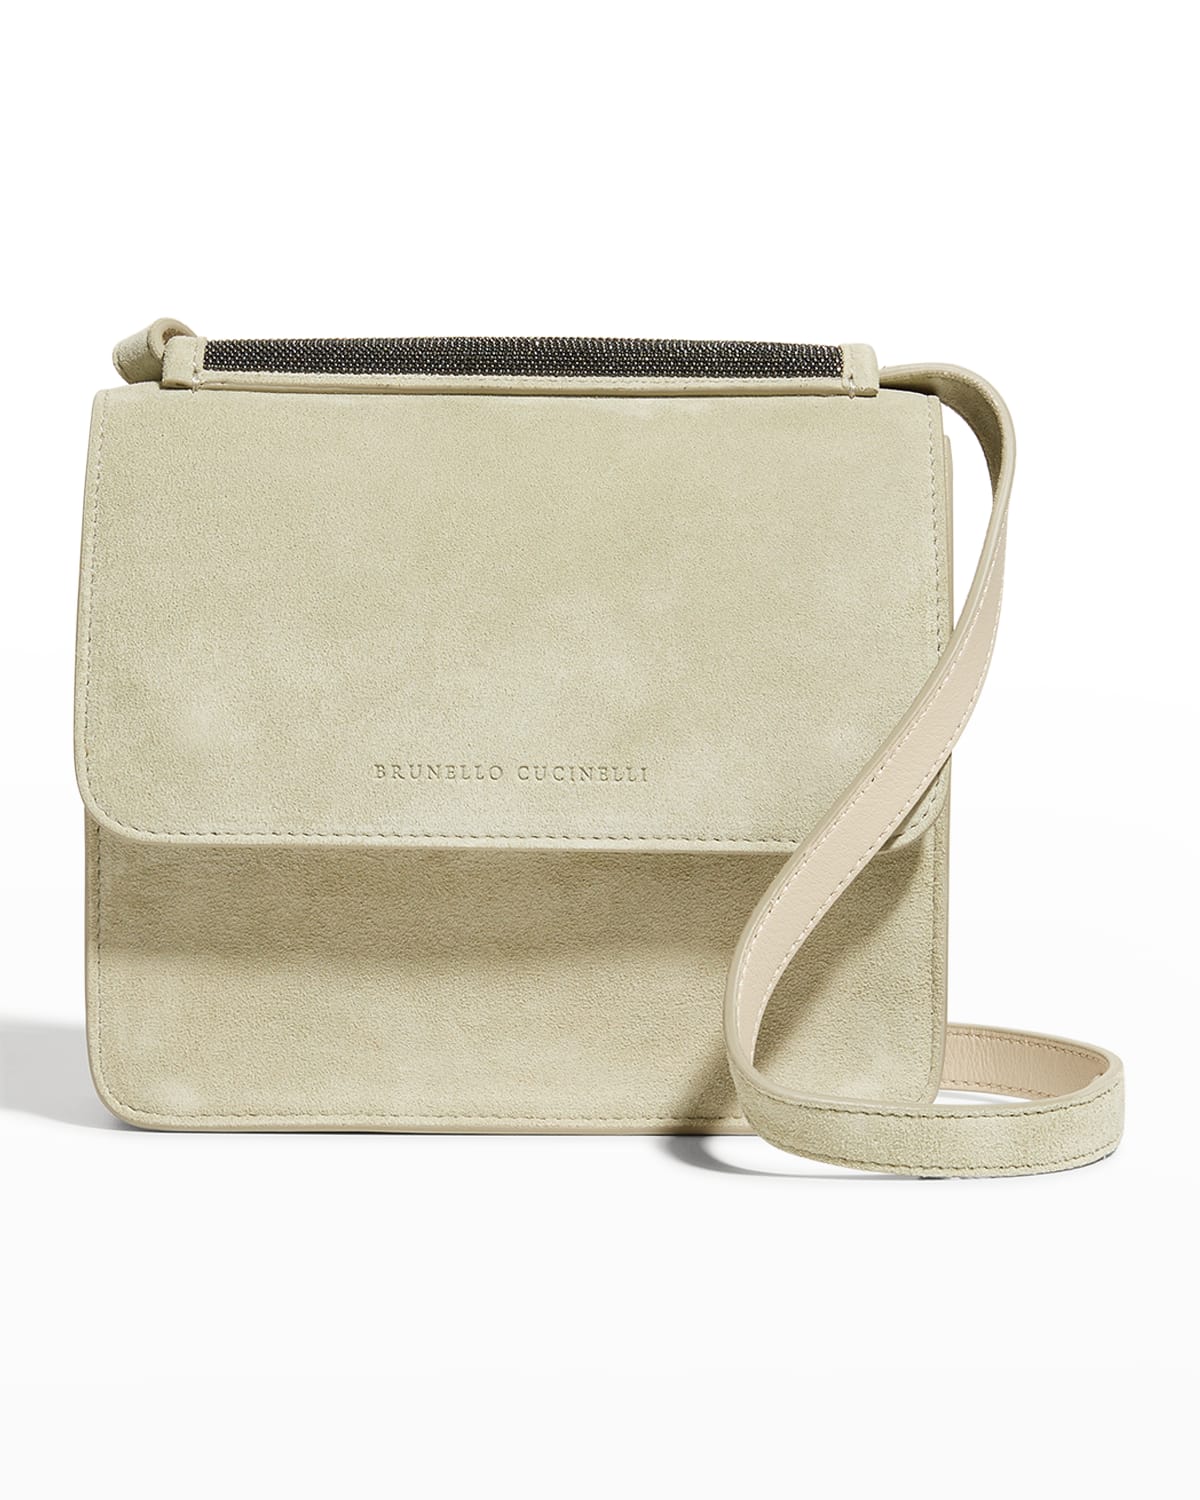 Brunello Cucinelli Bag | Neiman Marcus